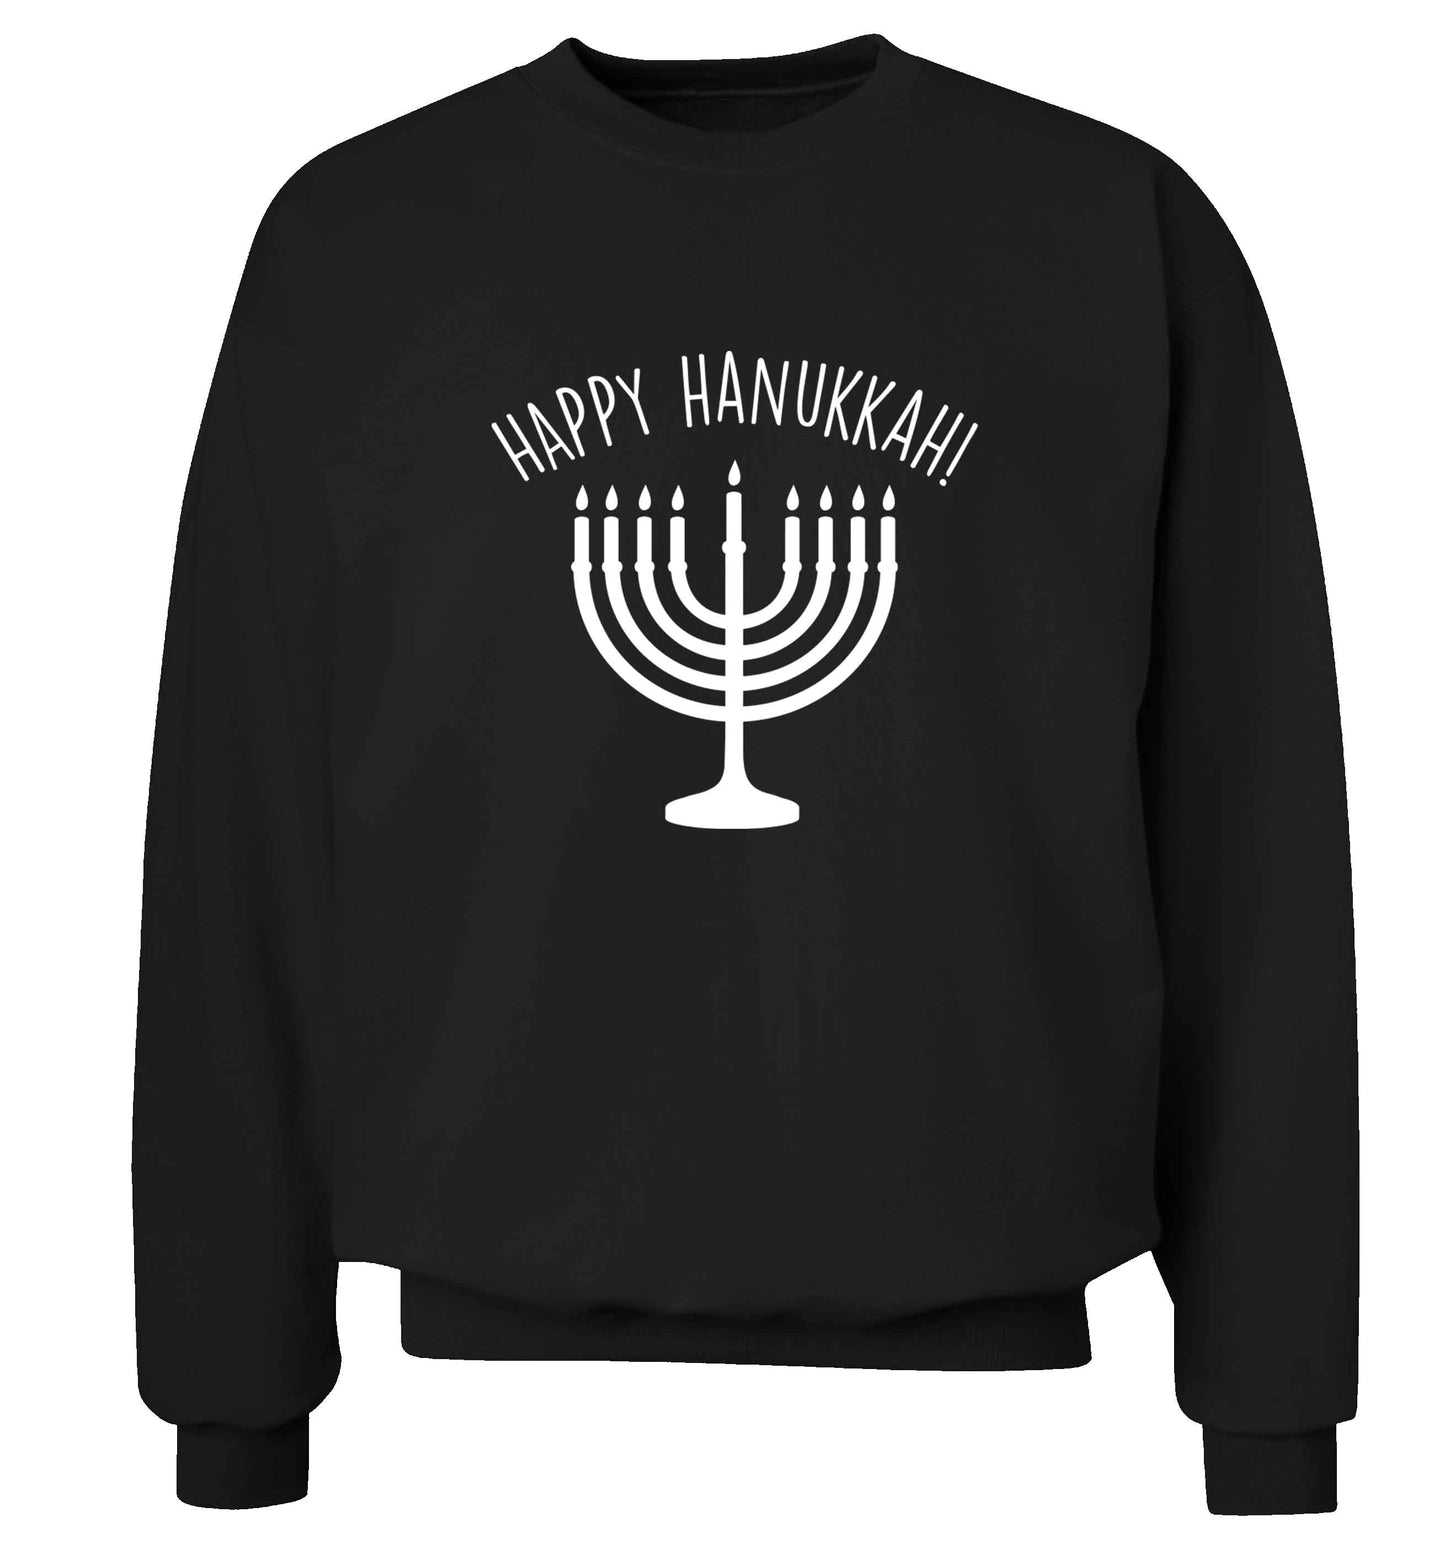 Happy hanukkah adult's unisex black sweater 2XL